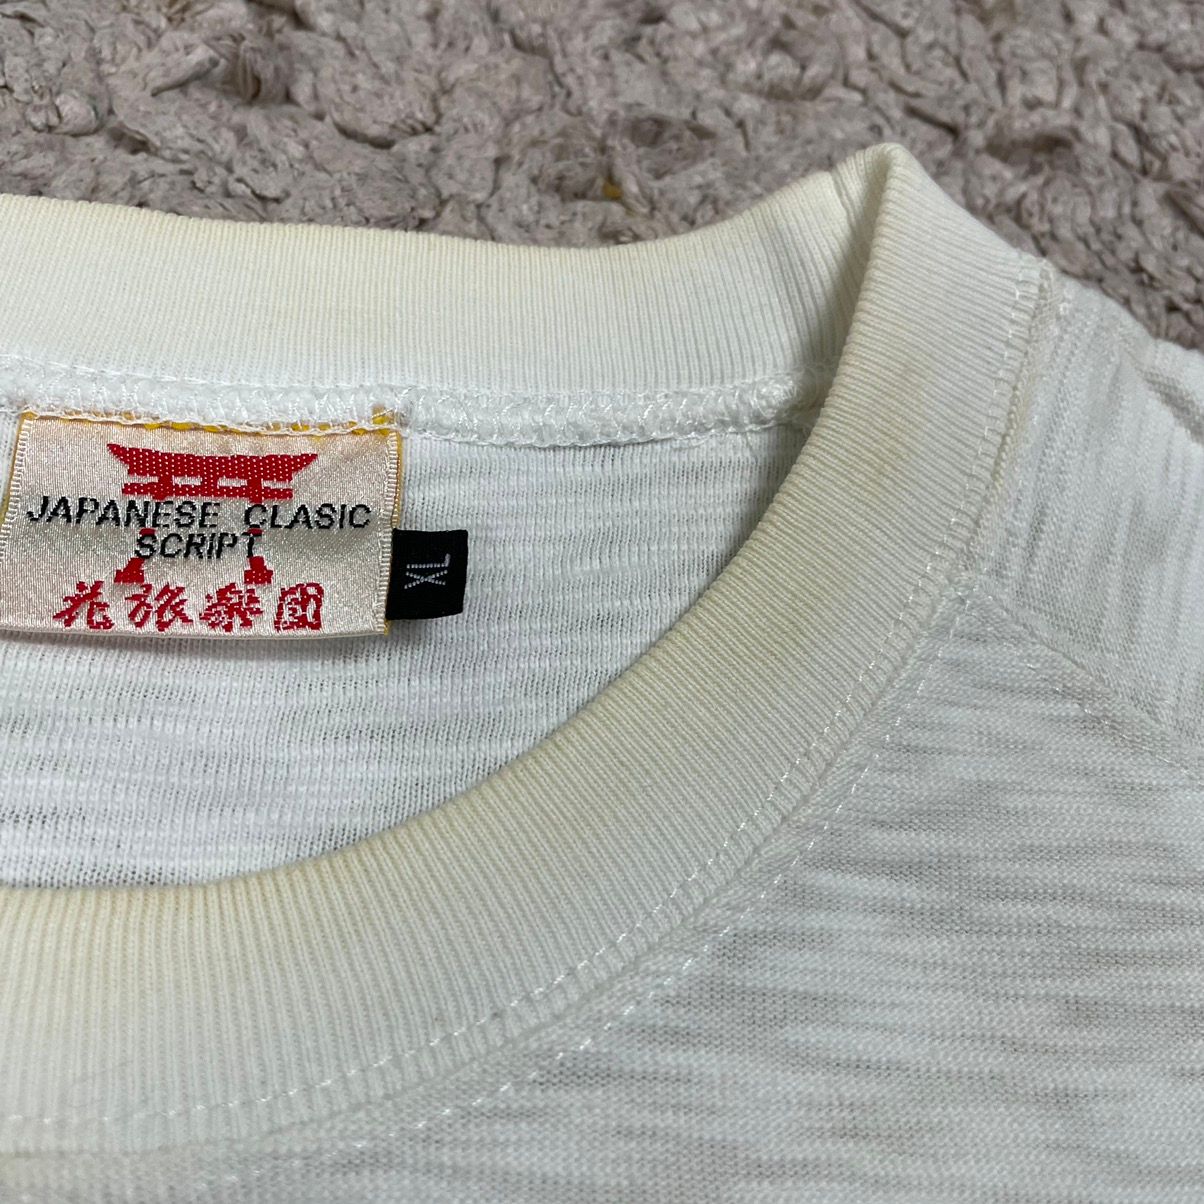 Vintage Vintage Japanese Clasic Script T-shirt Size US XL / EU 56 / 4 - 12 Thumbnail